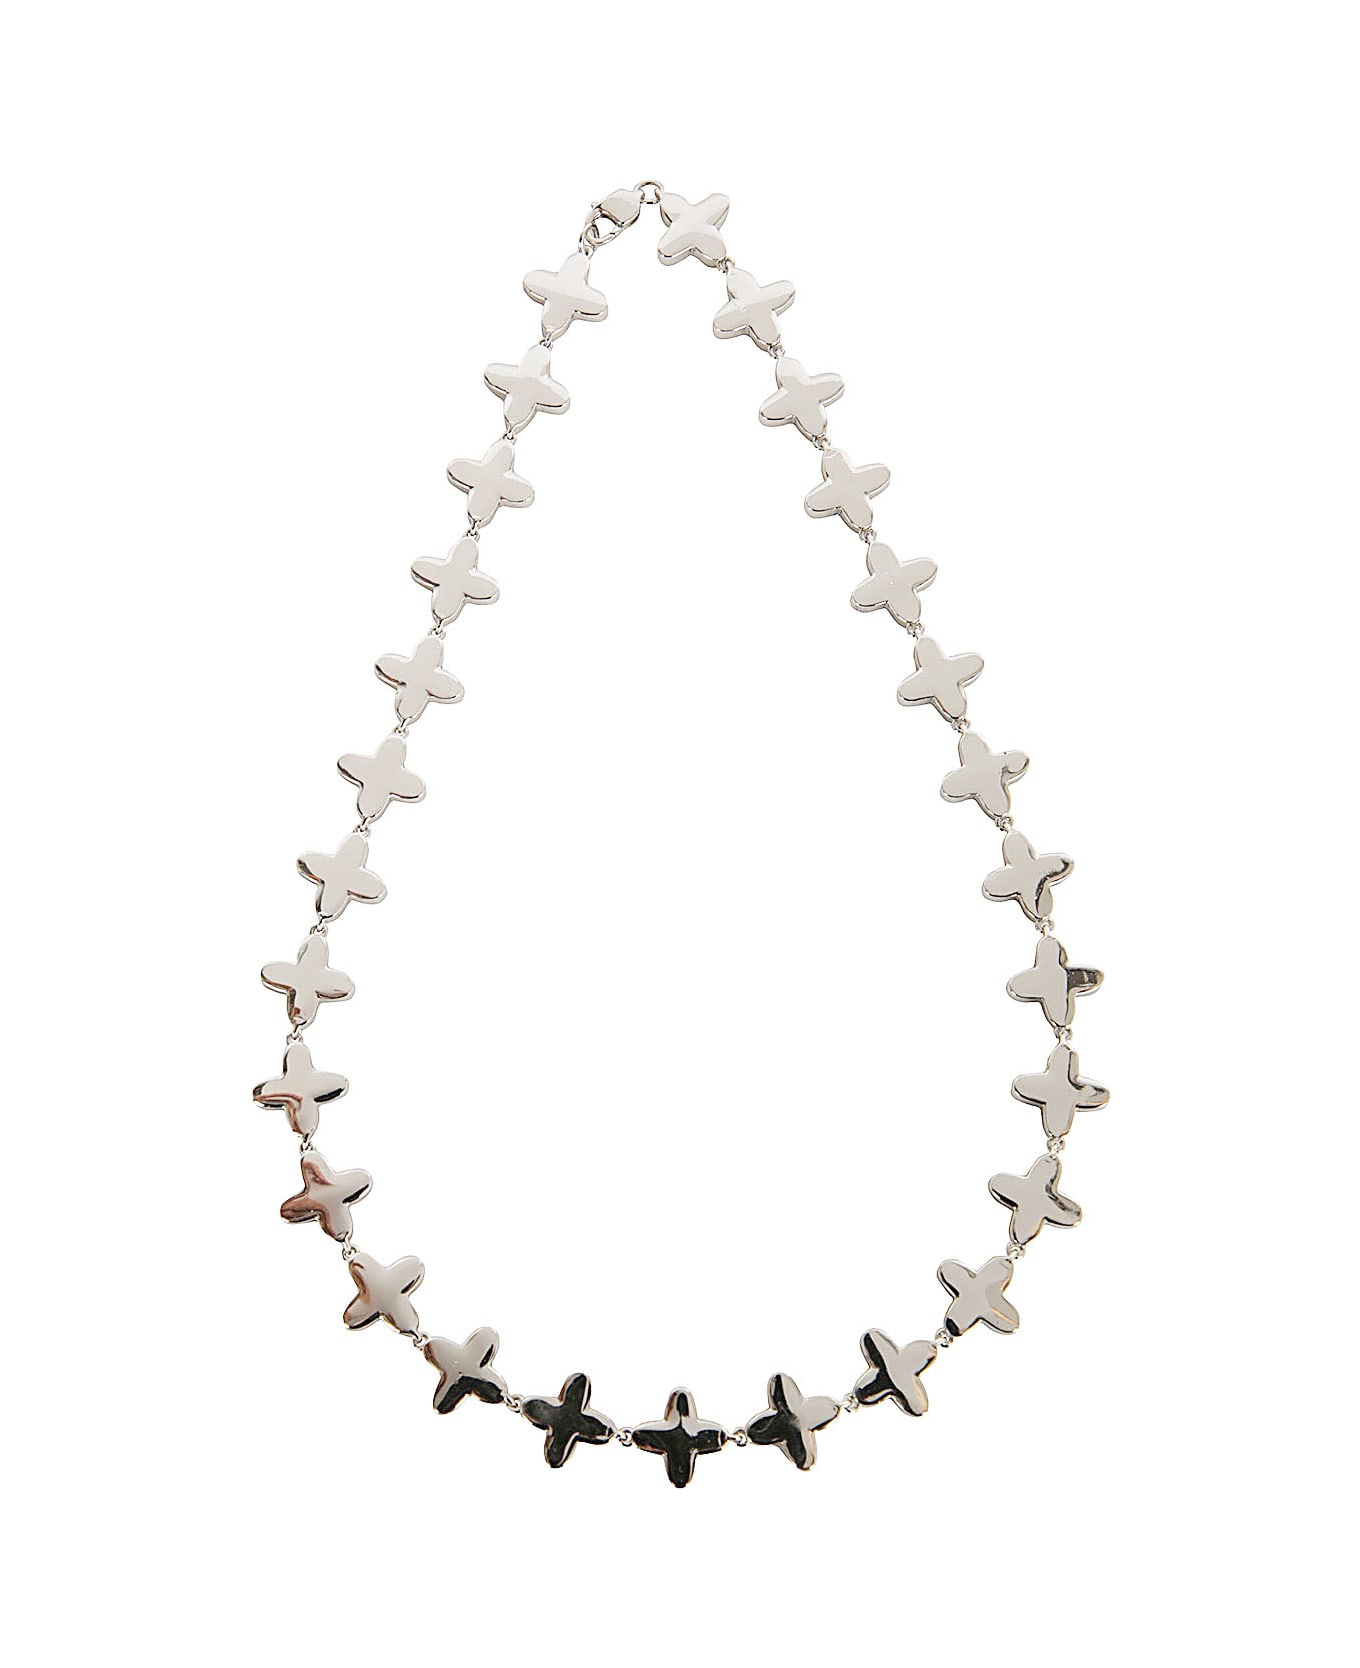 Darkai Clover Tennis Necklace - White Black ネックレス